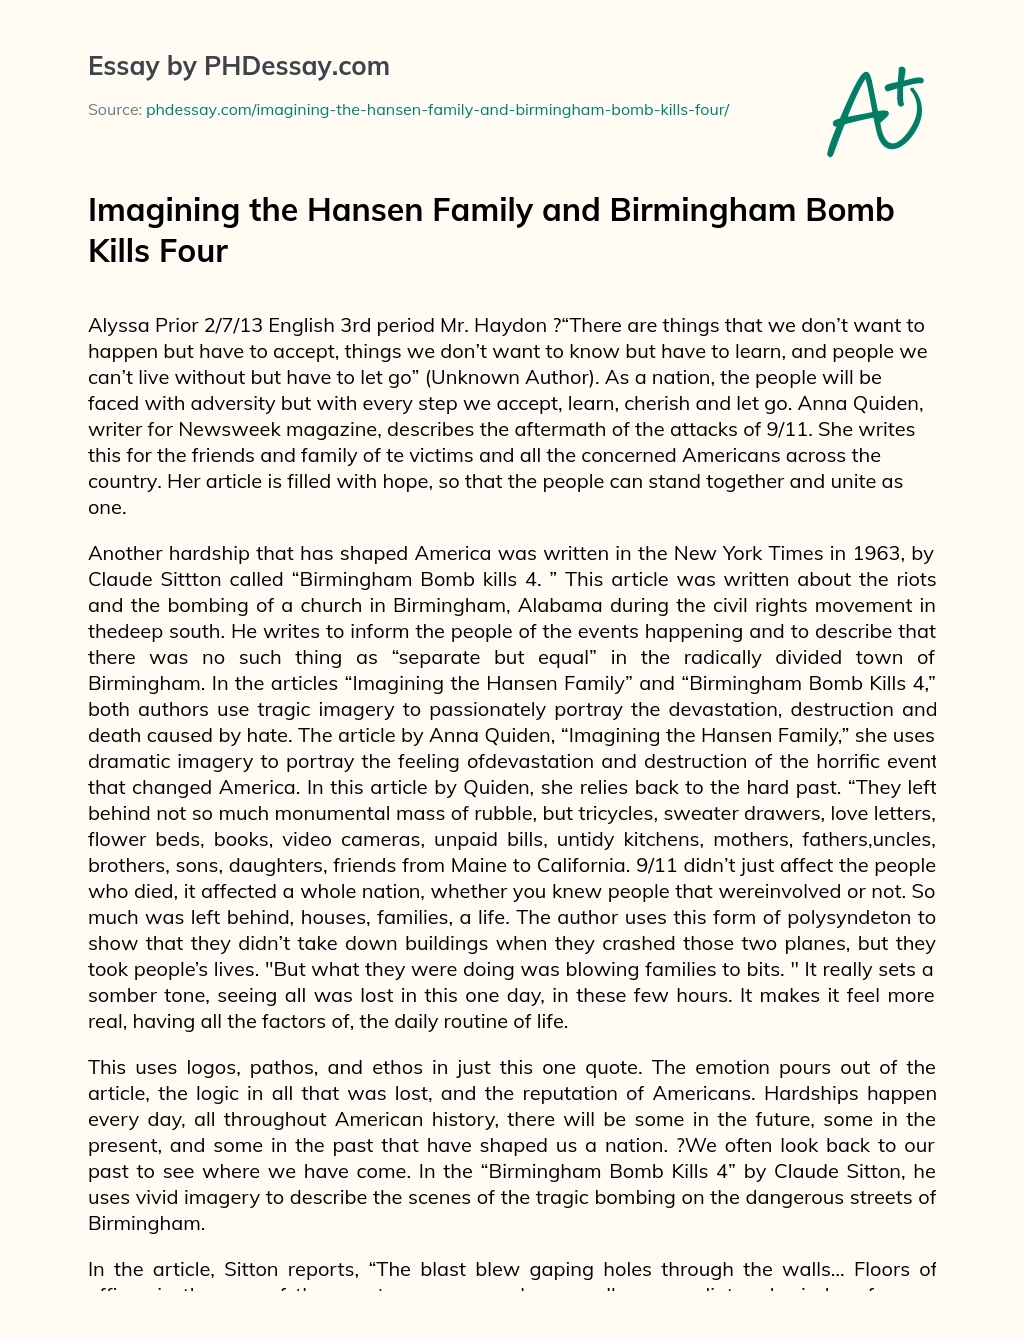 Imagining the Hansen Family and Birmingham Bomb Kills Four essay